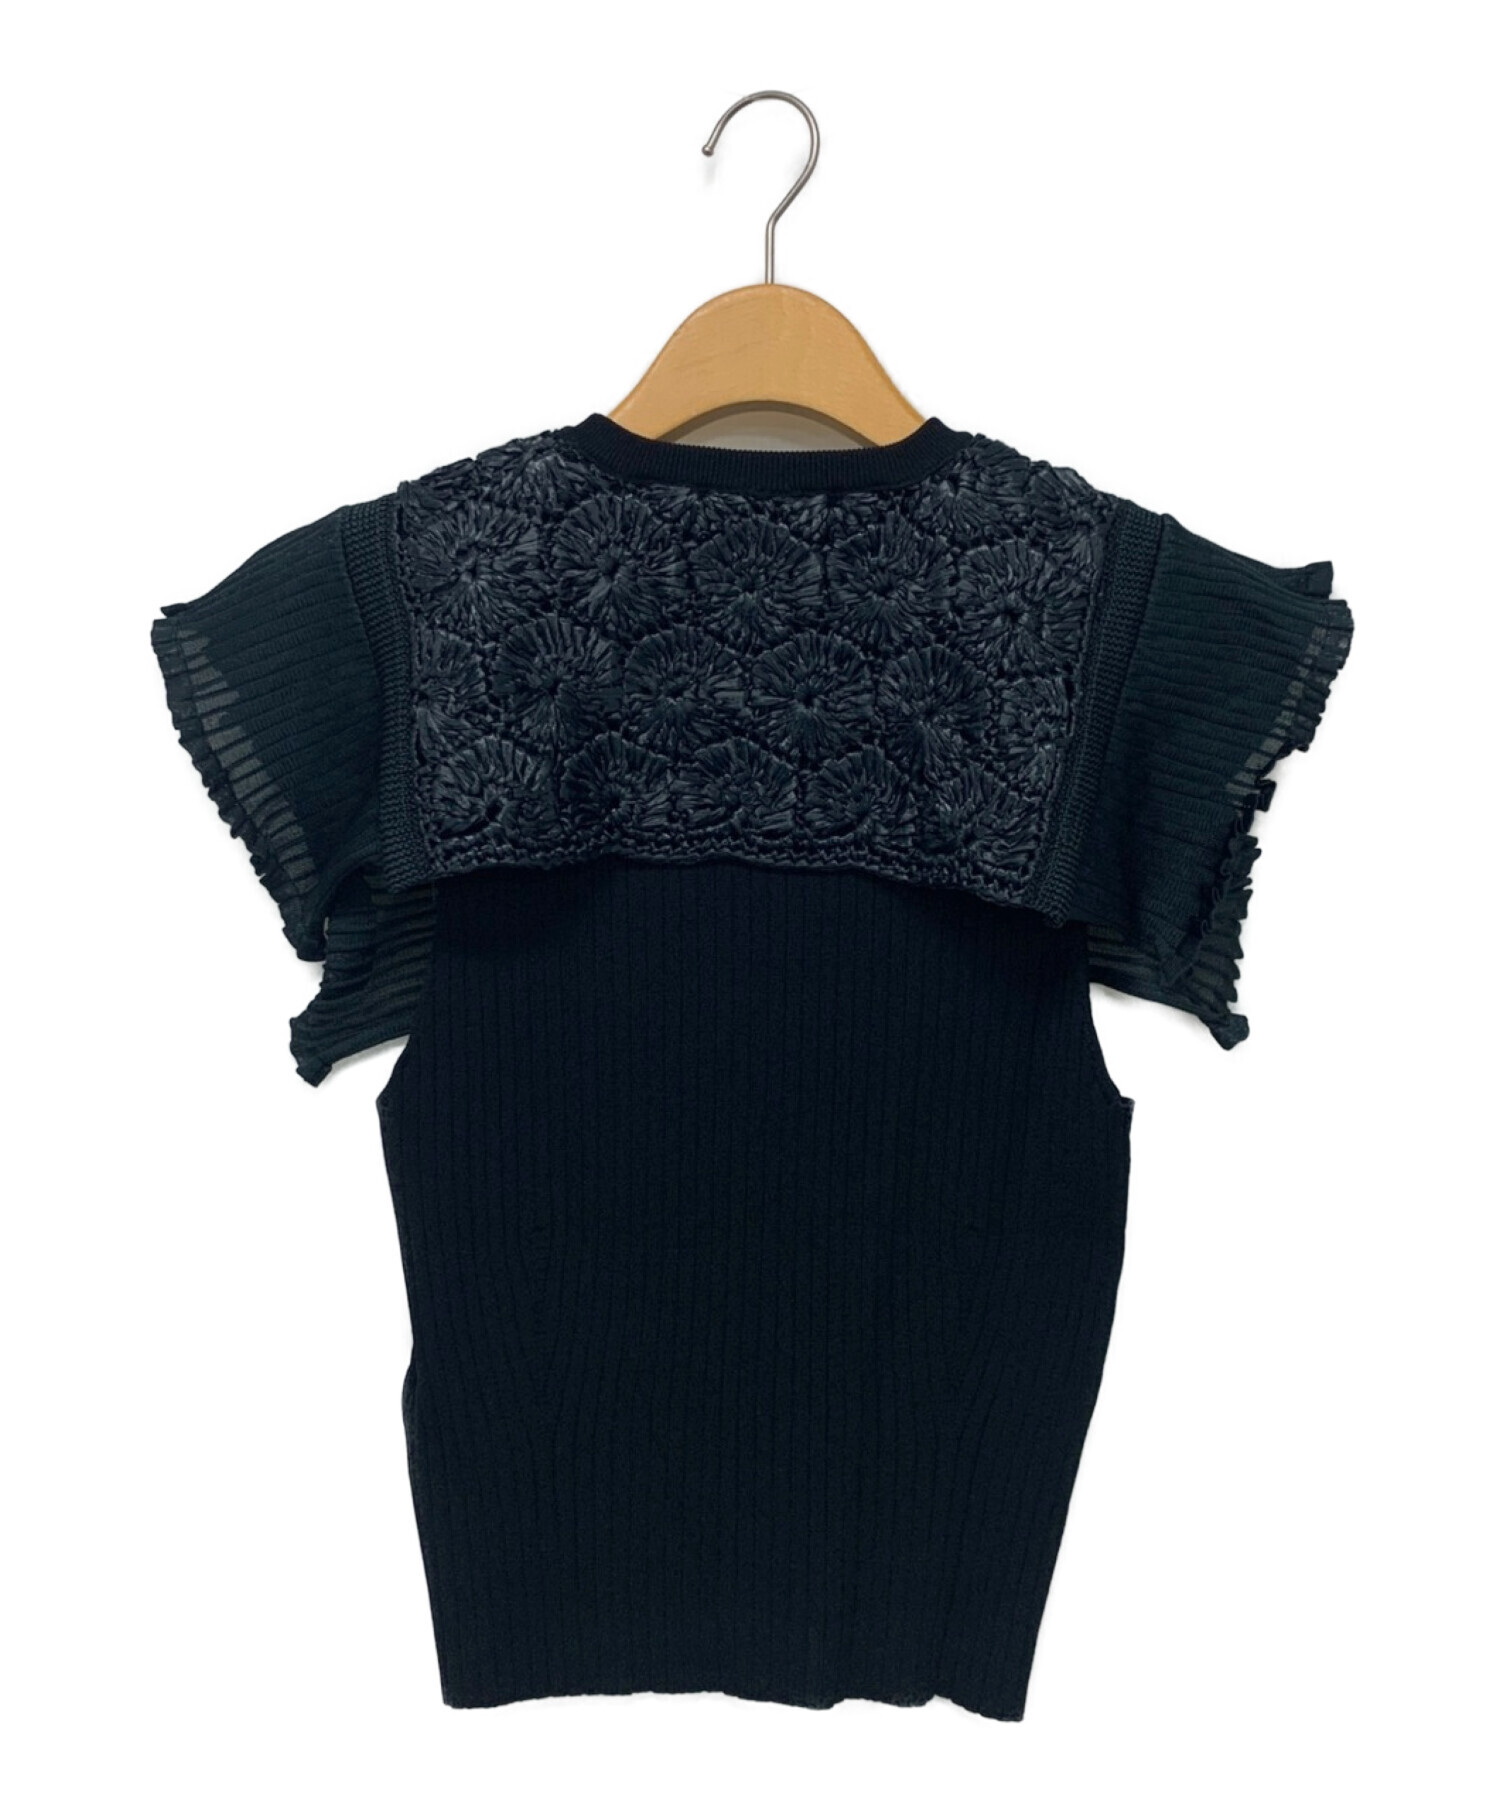 TOGA PULLA (トーガ プルラ) Sheer knit top ブラック サイズ:38